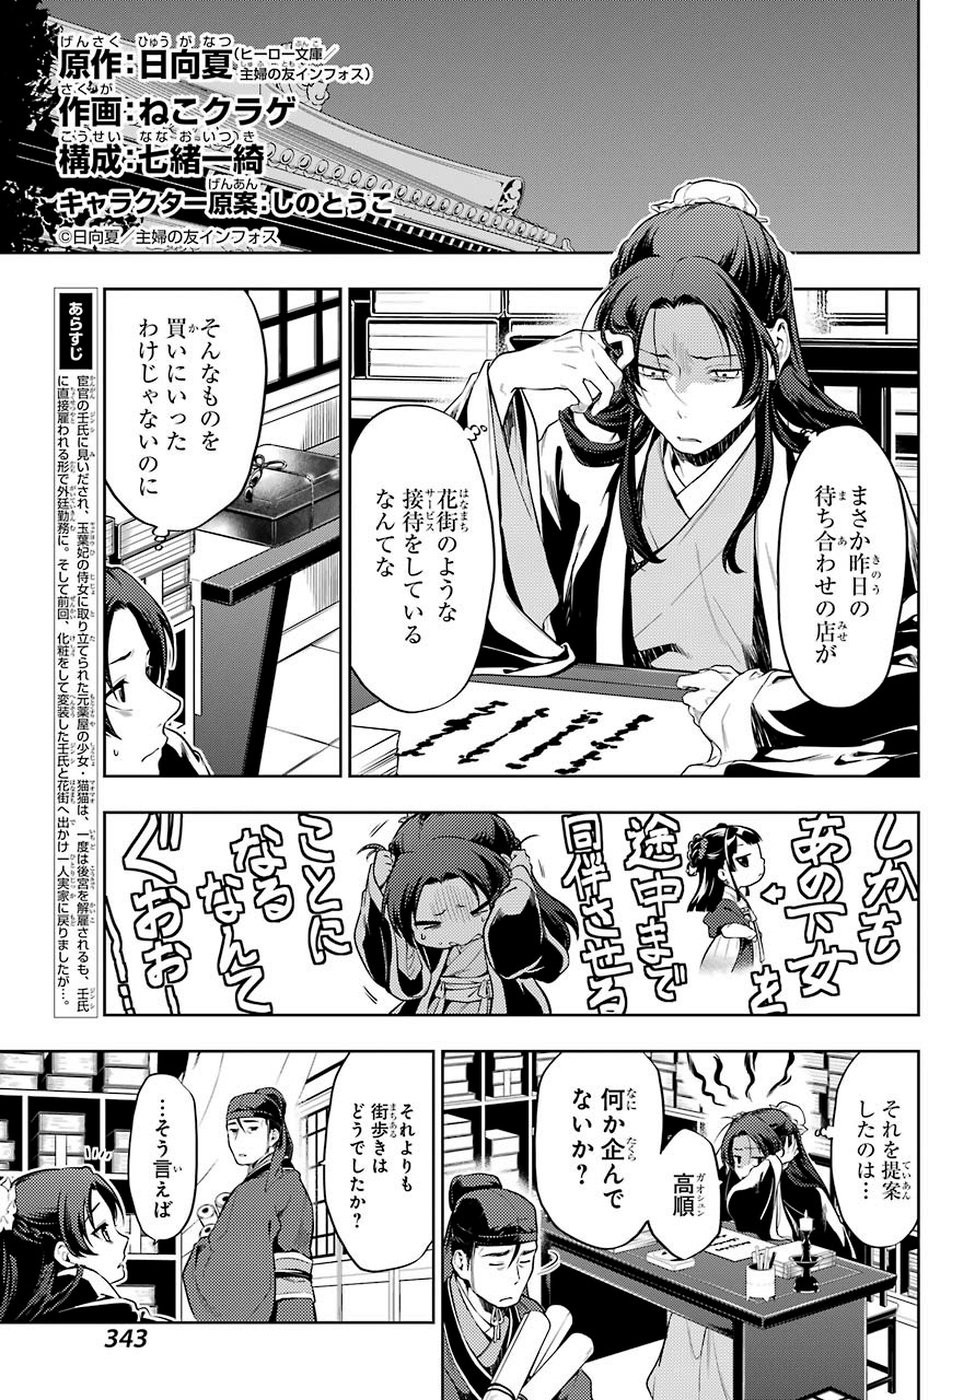 Kusuriya no Hitorigoto - Chapter 29.1 - Page 5